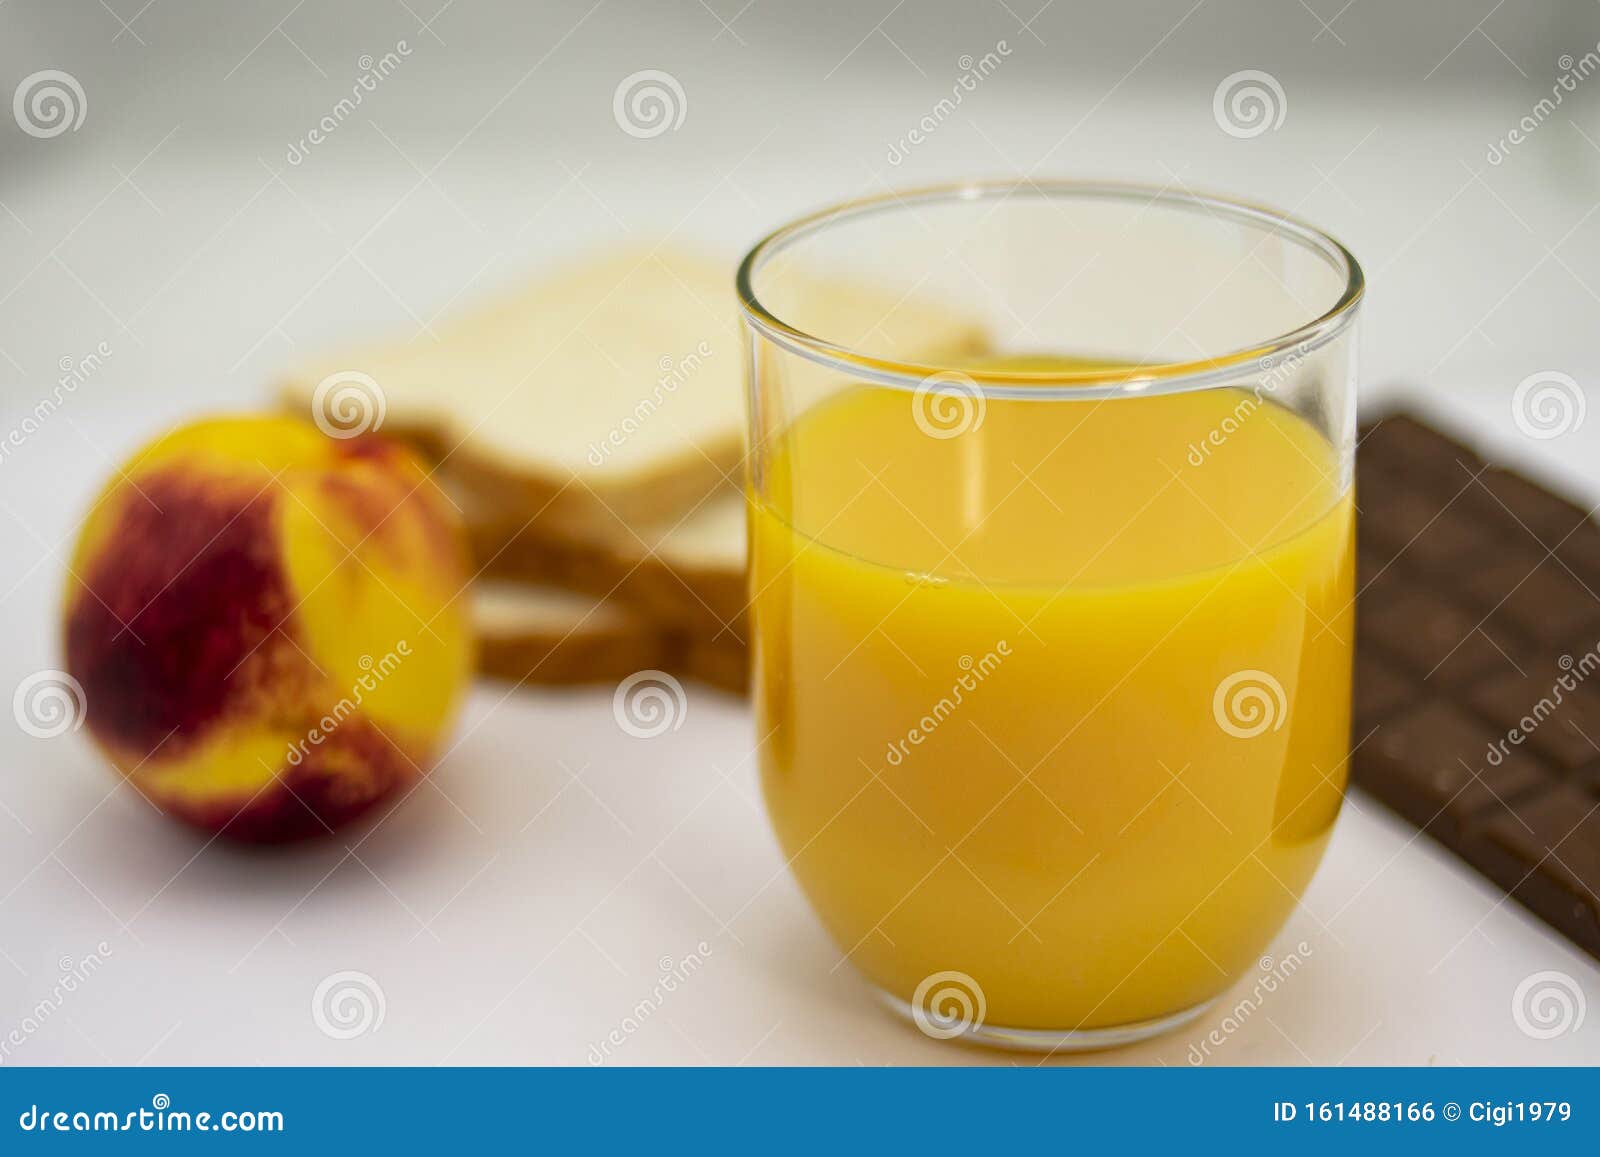 breakfast consisting of natural orange juice, ripe peach, white bread and milk chocolate